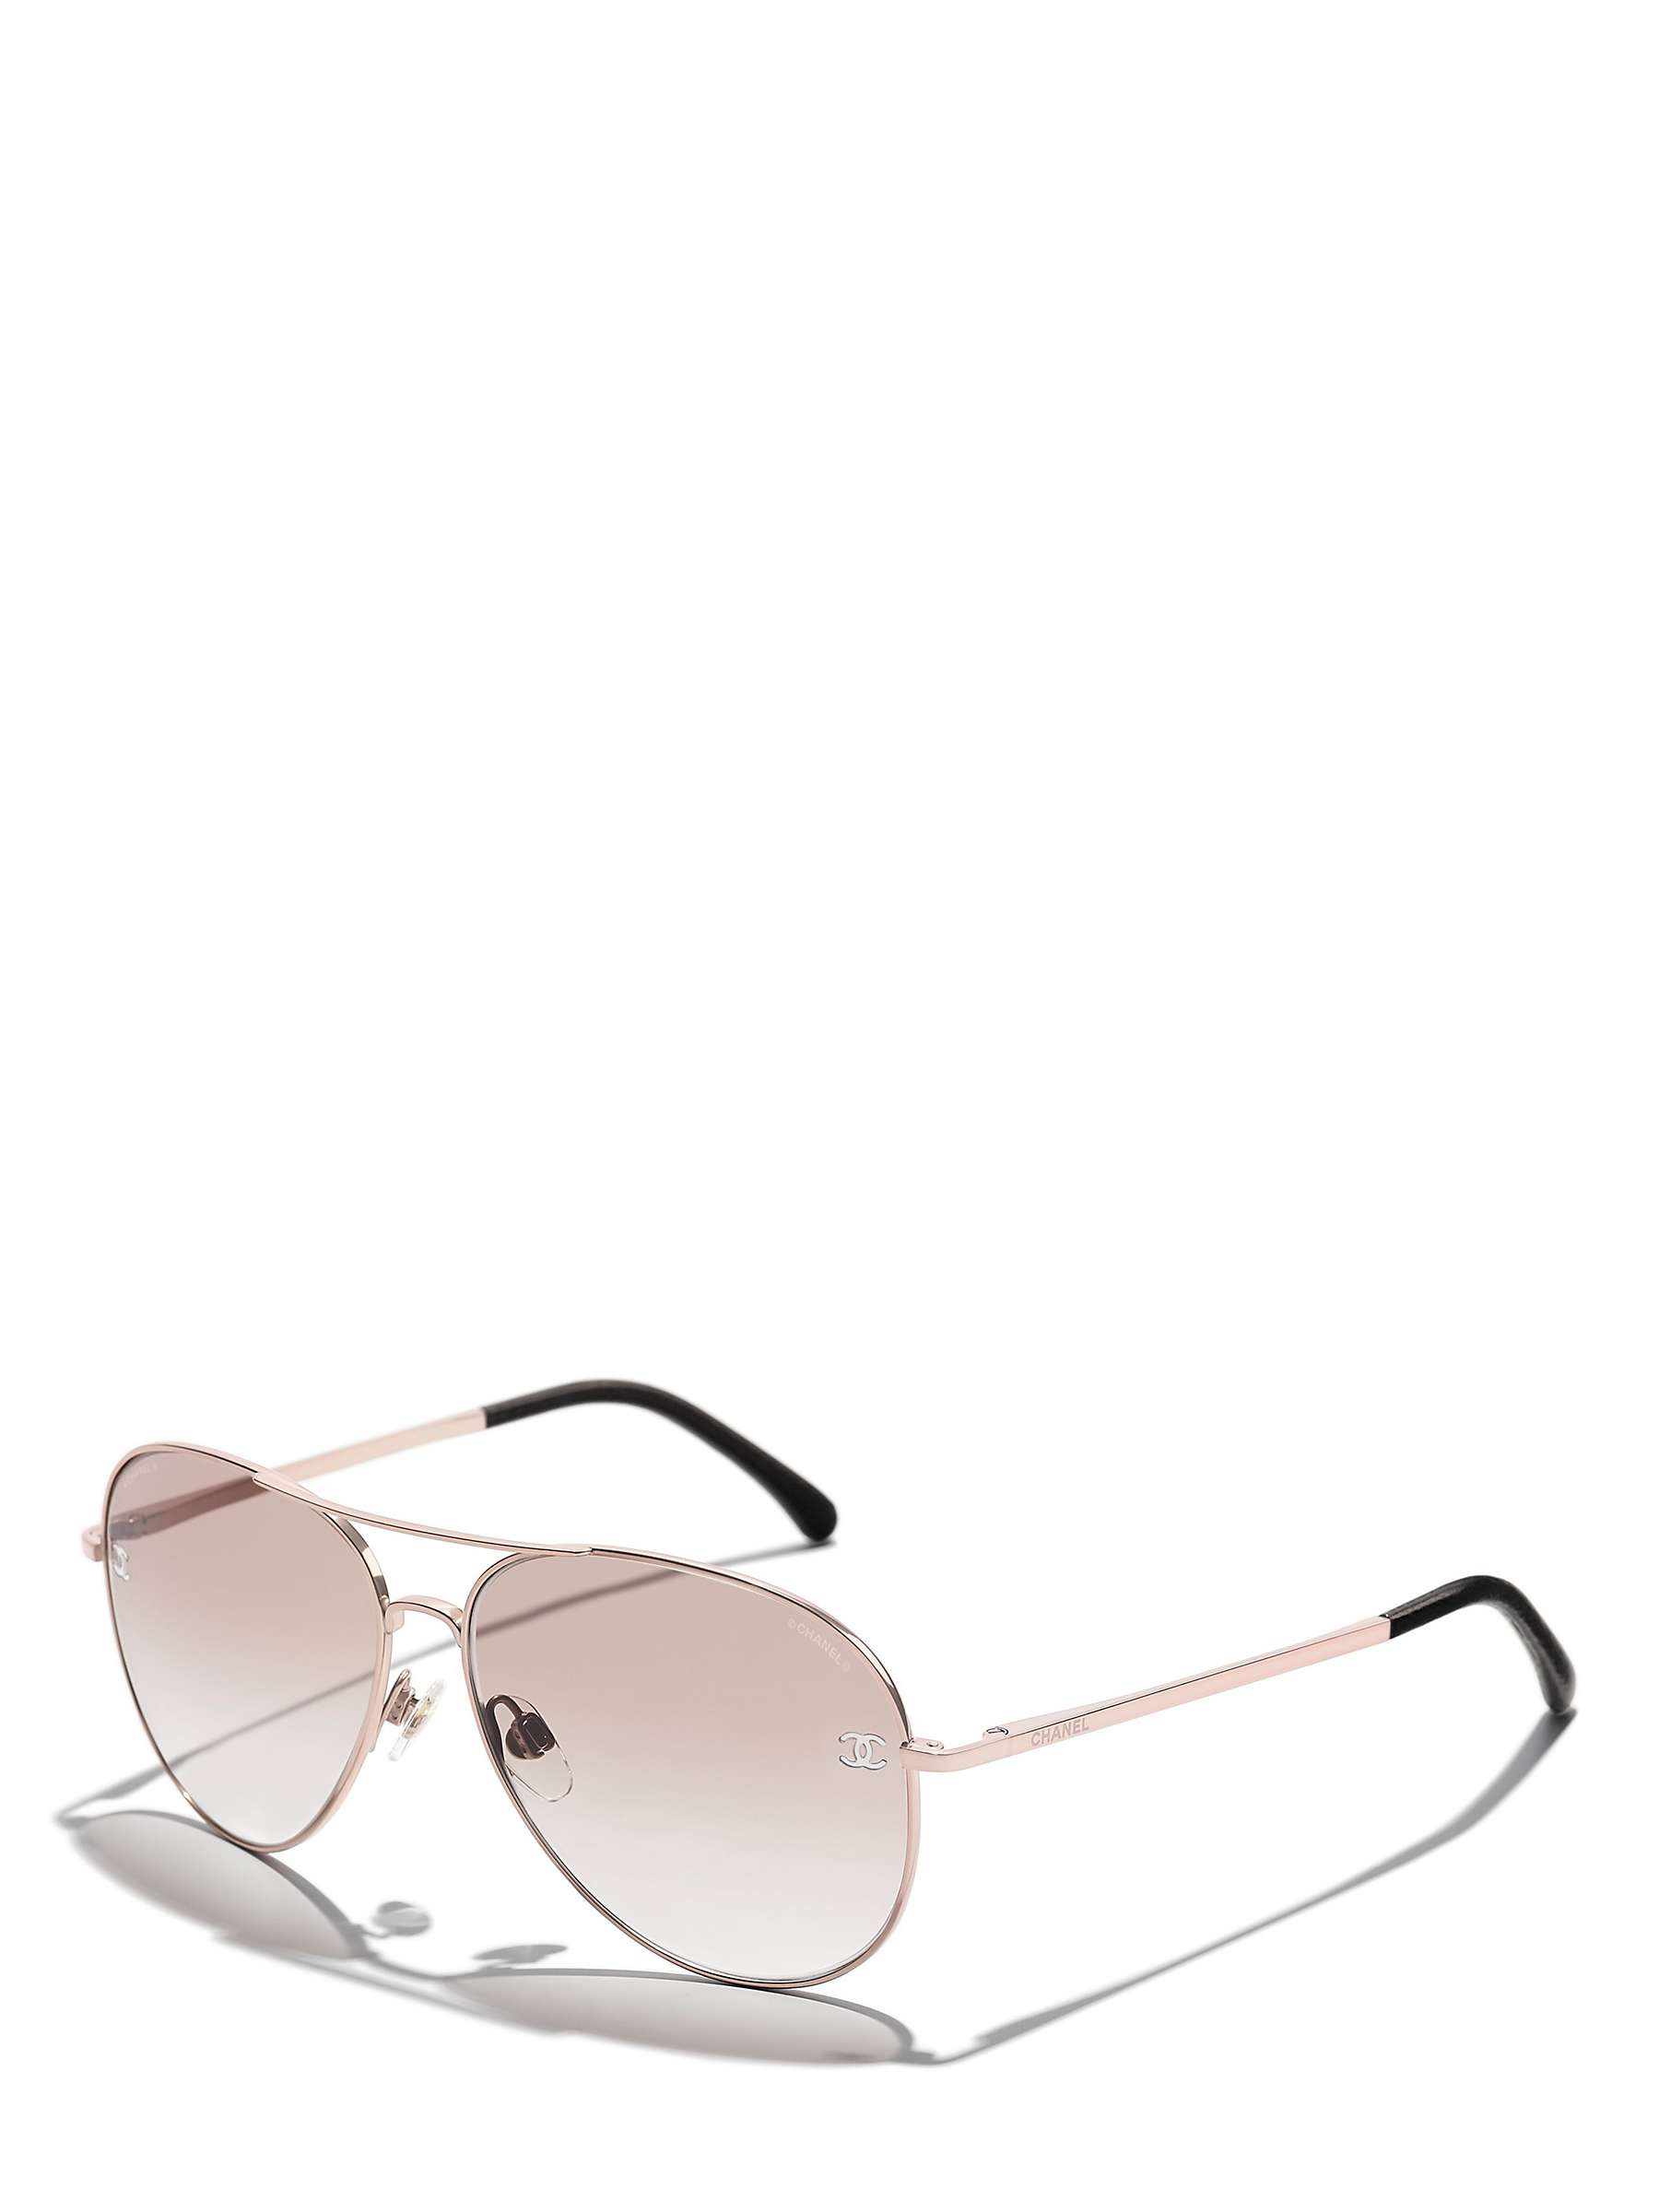 Buy CHANEL Pilot Sunglasses CH4189TQ Rose Gold/Beige Gradient Online at johnlewis.com